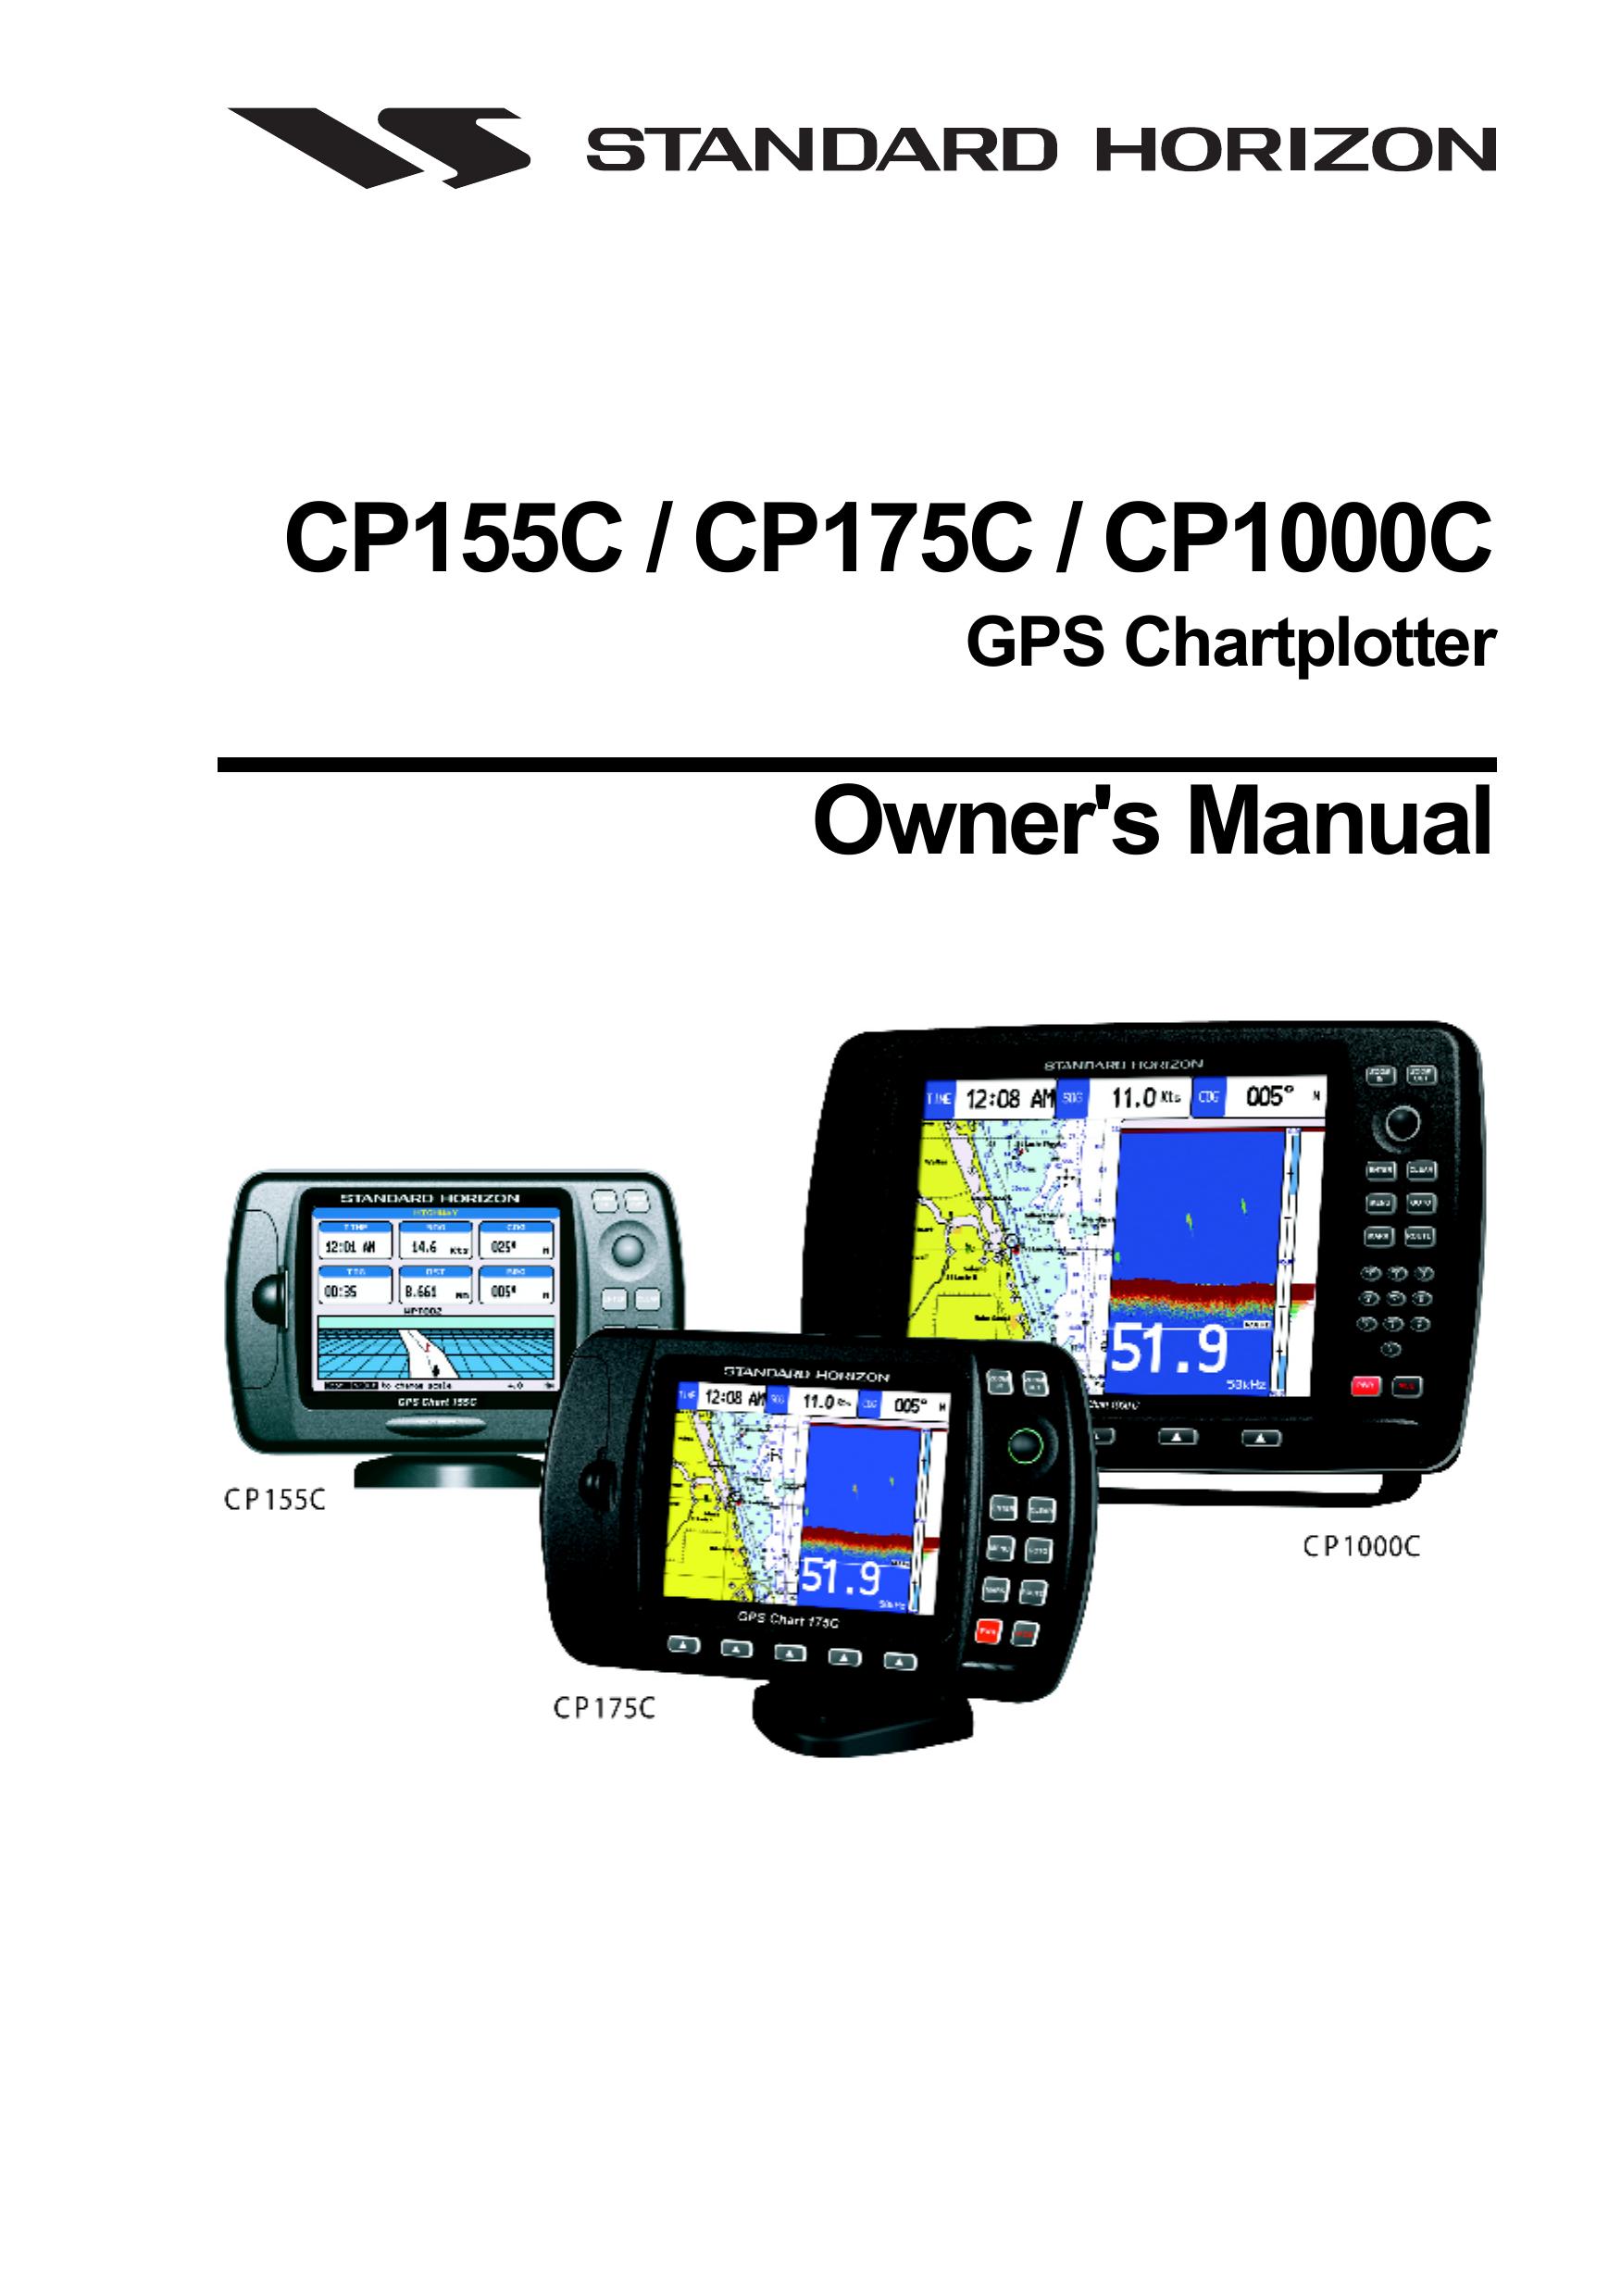 Standard Horizon CP1000C Marine GPS System User Manual